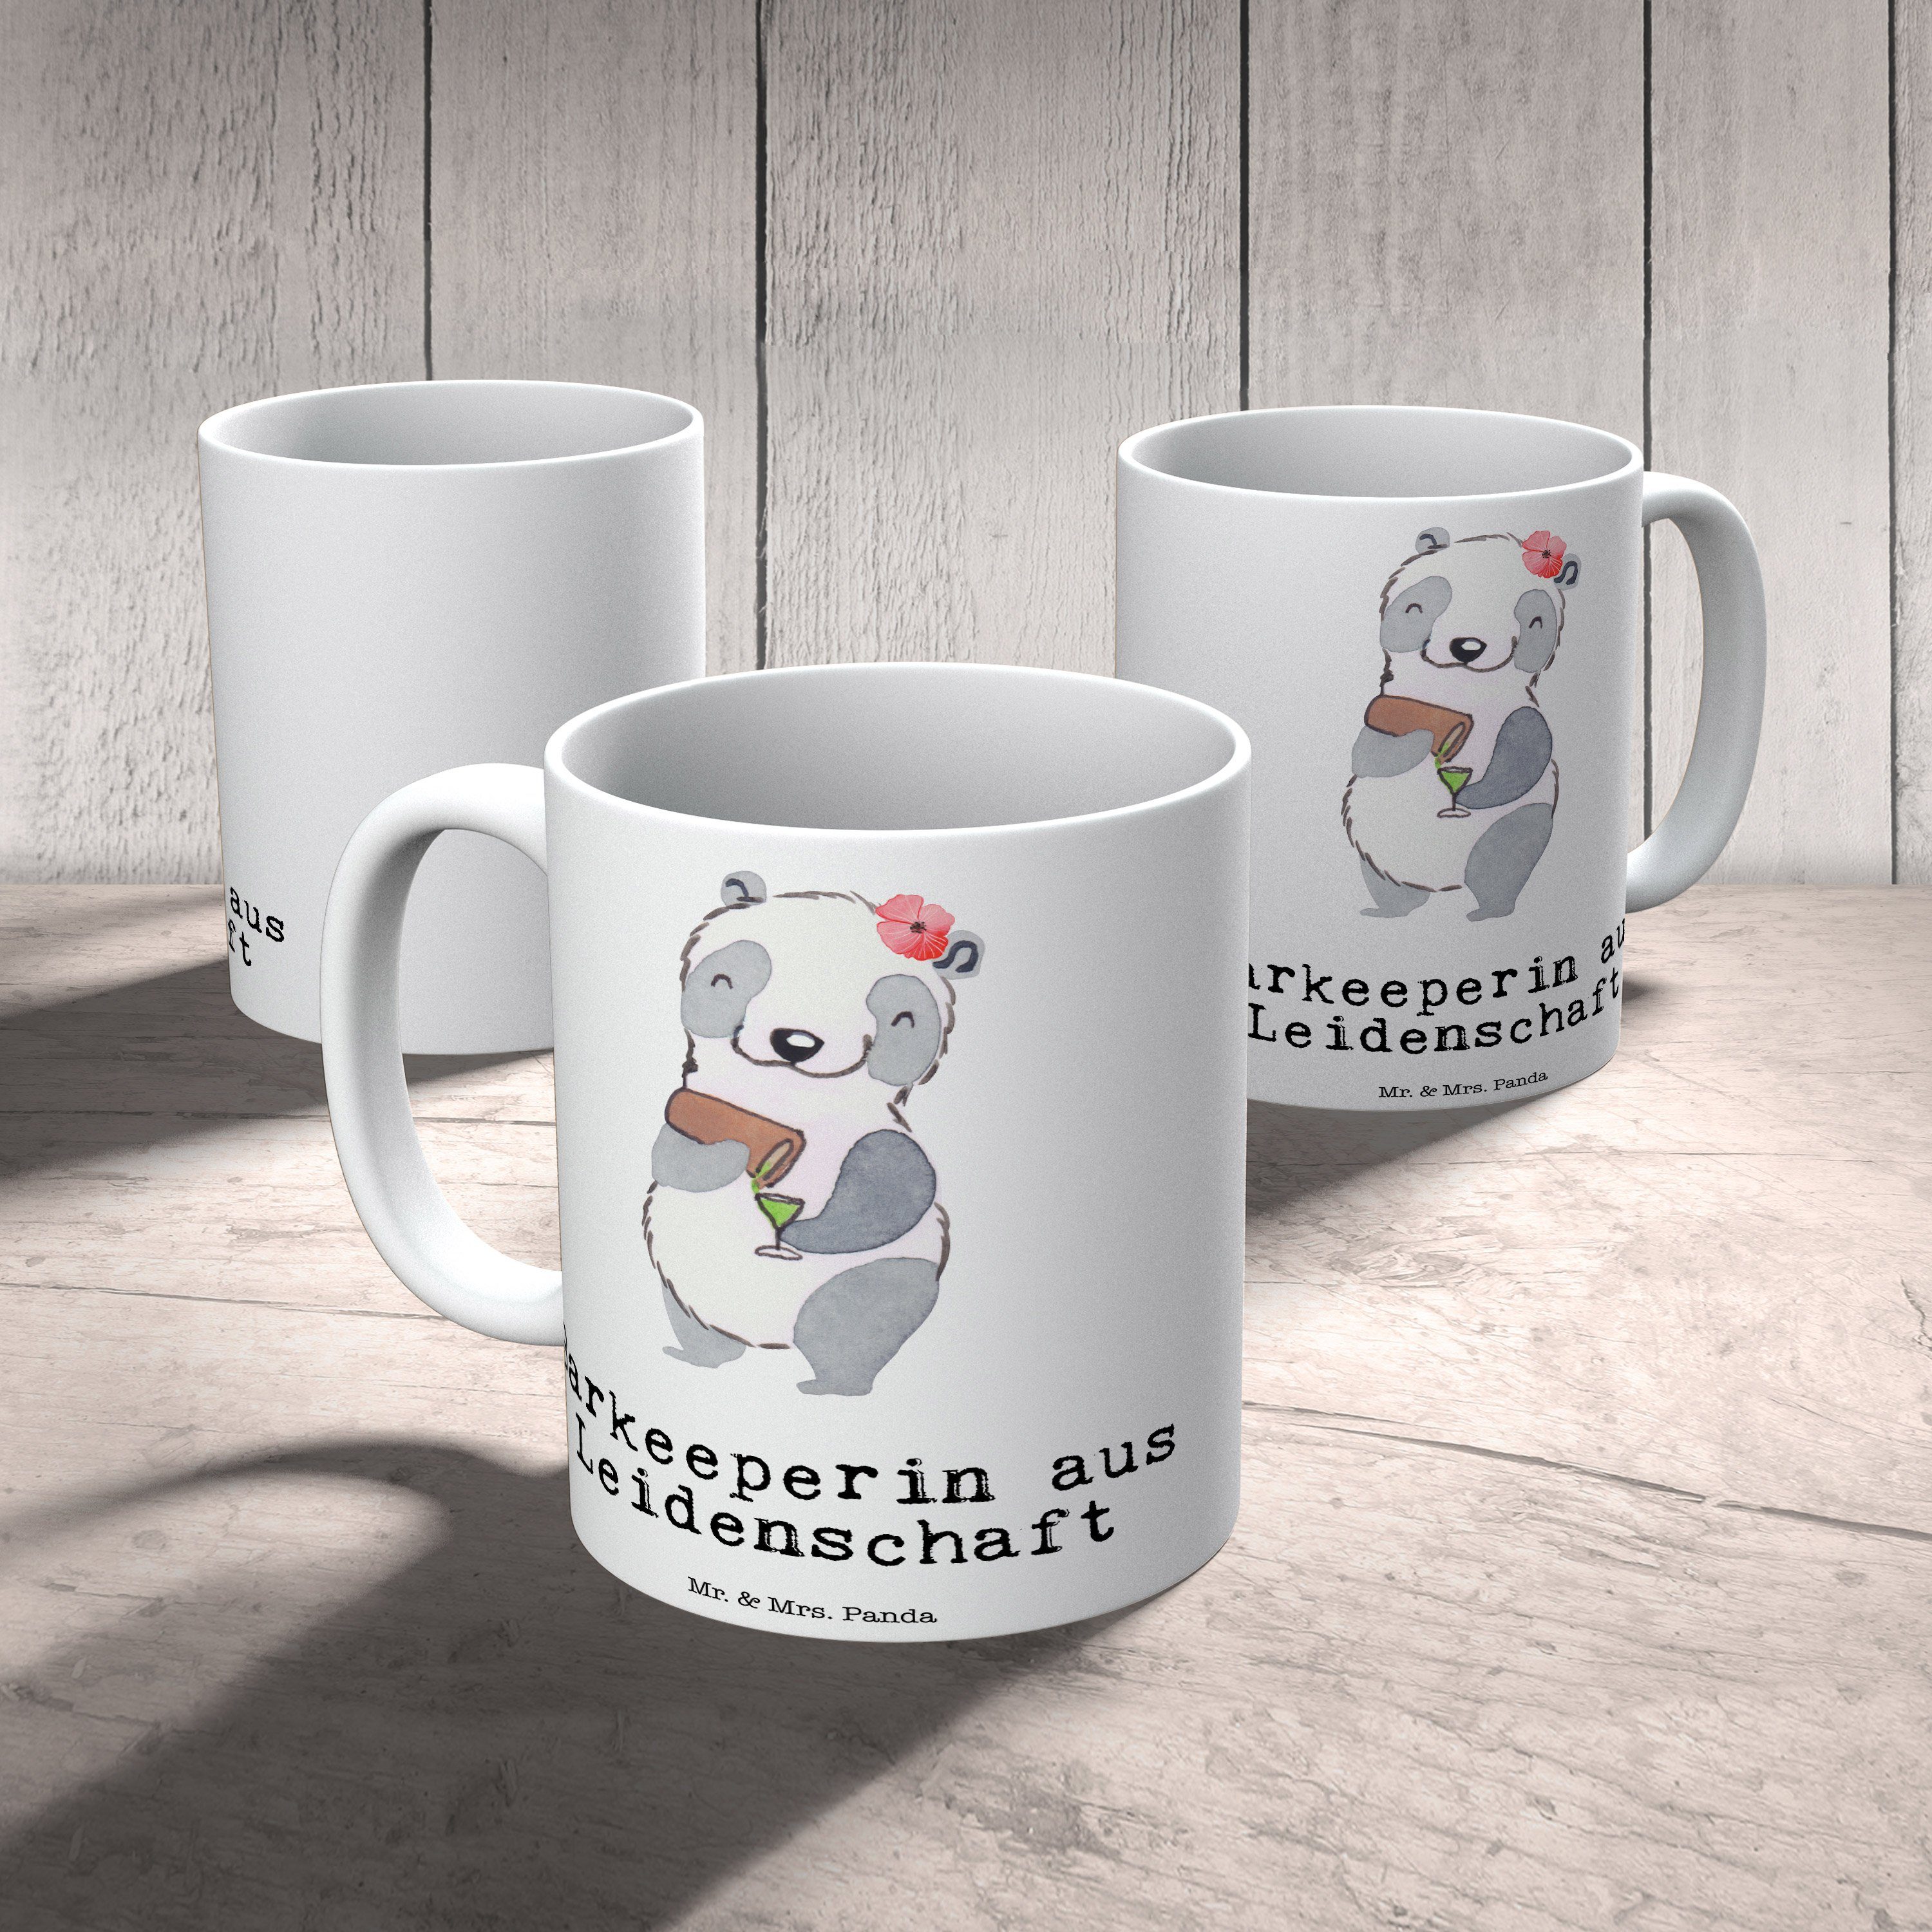 Mr. & Mrs. Panda - Barkeeperin Barbesitzerin, Weiß Tasse Keramik Geschenk, Kaffee, aus Leidenschaft 